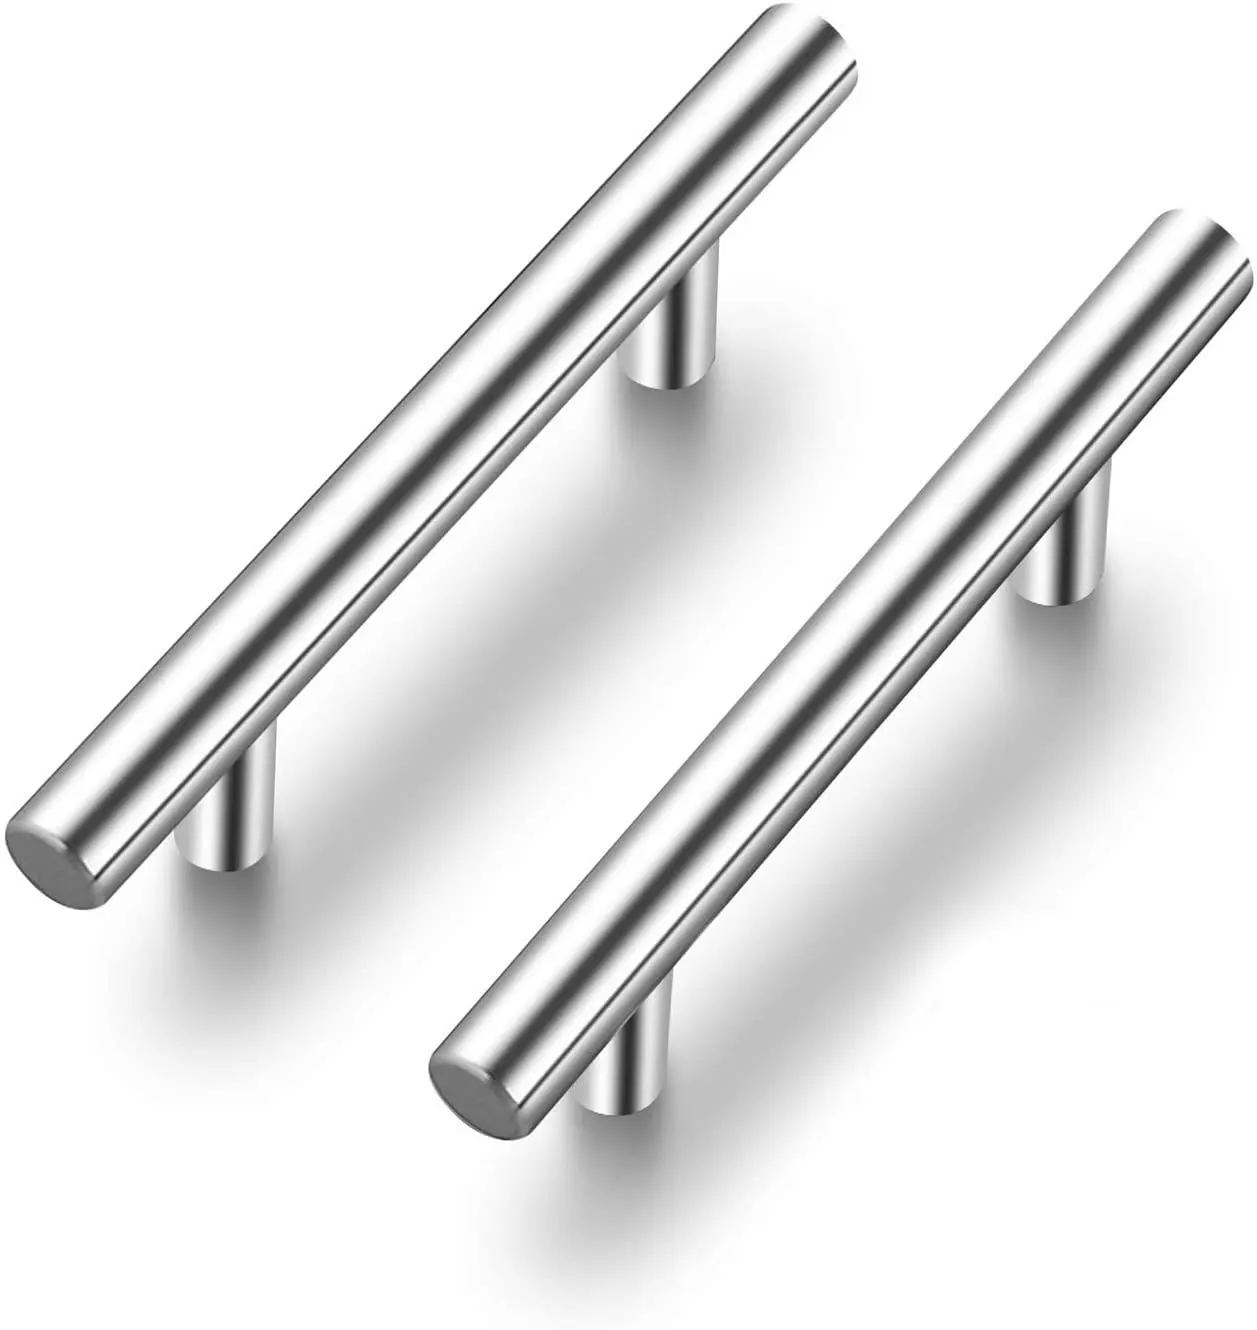 Stainless Steel T-Bar Door Cabinet Pull Handles Kitchen Cupboard Drawer Knobs 